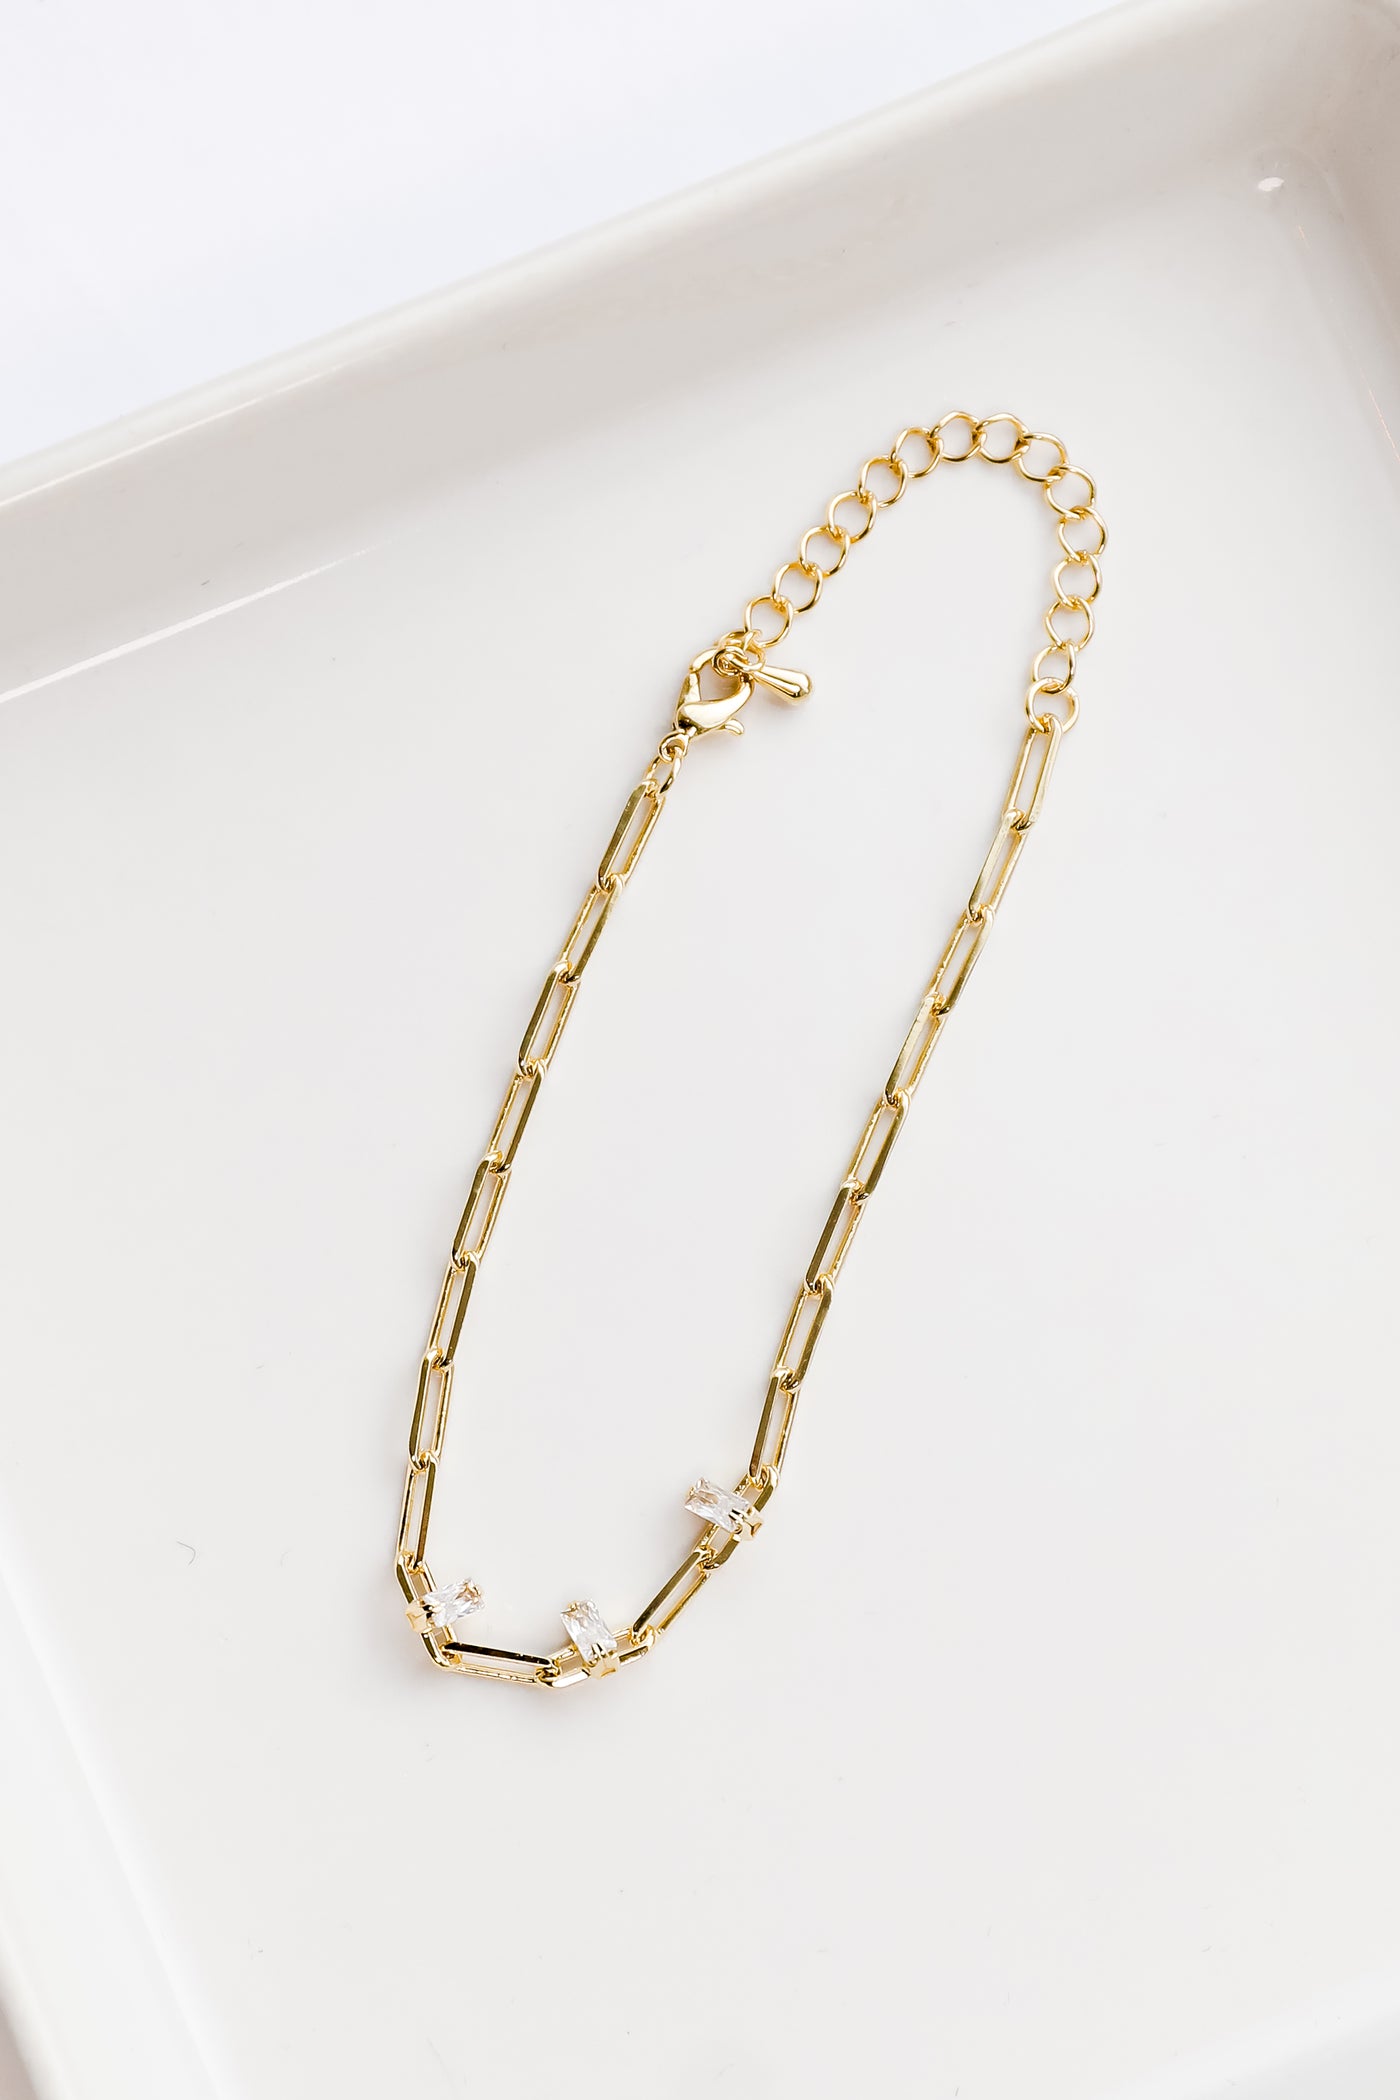 gold chain bracelet flat lay